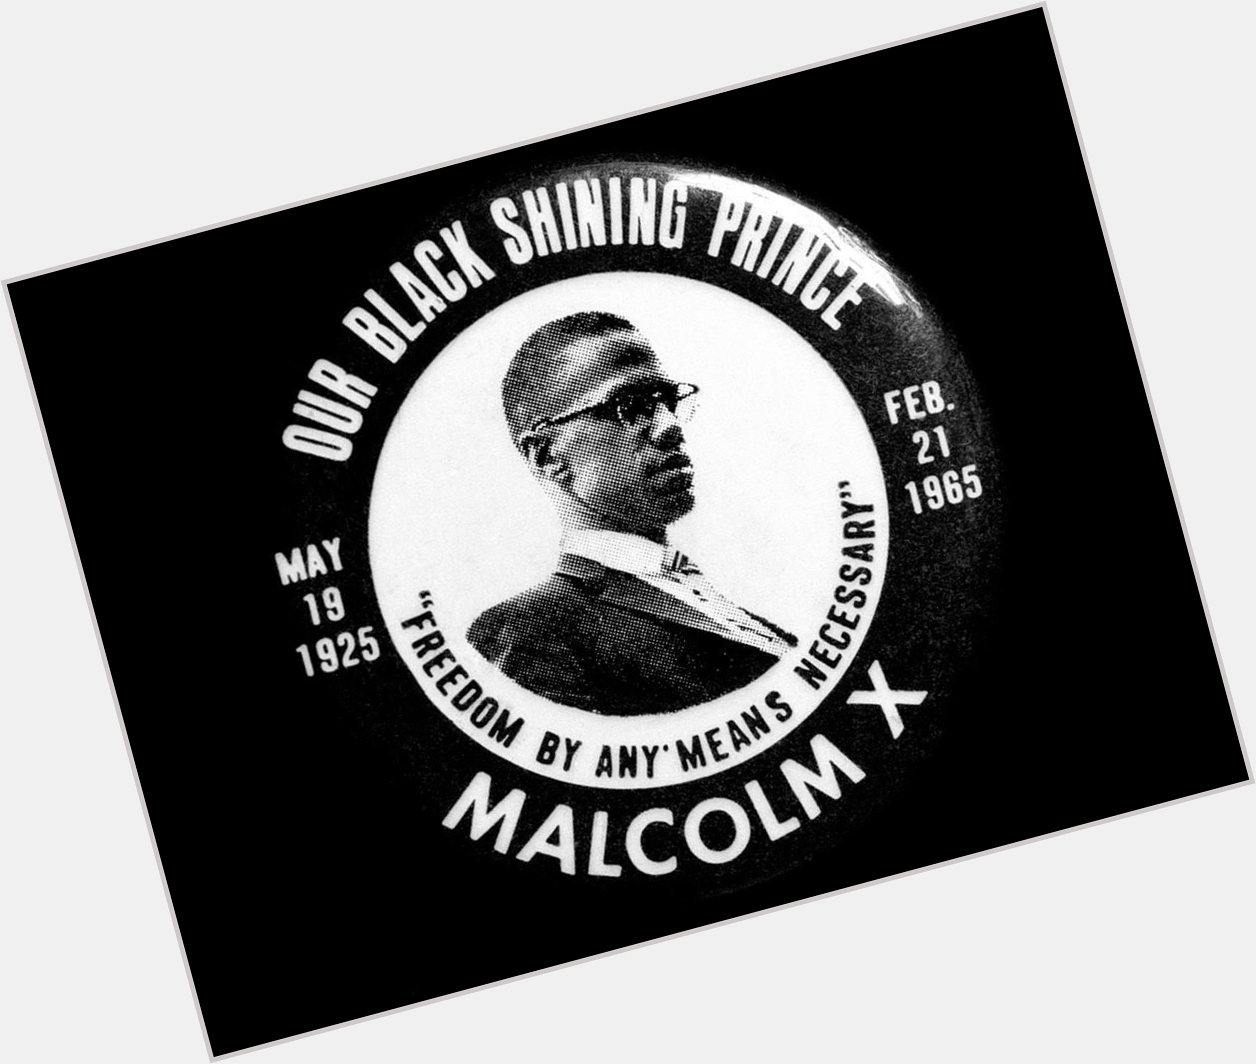 Happy Malcolm X Day!
Happy Birthday to Malik El Shabazz, our Shining Black Prince 